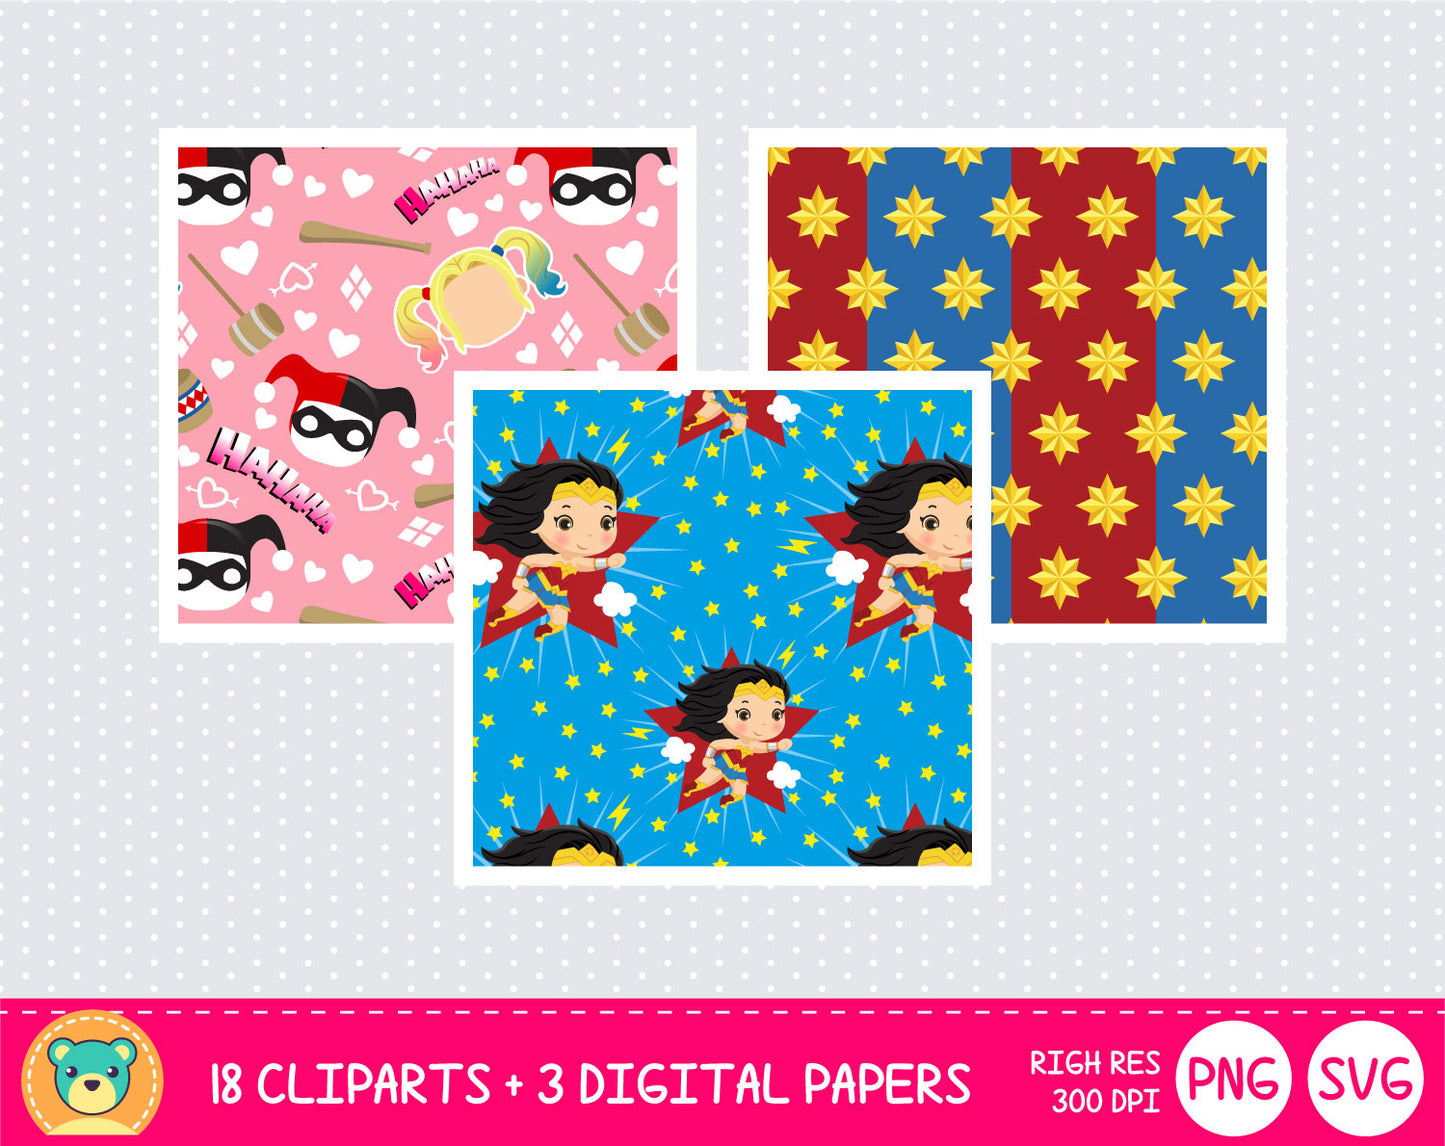 Cute Super Girls clipart set, Superheroines clip art for decoration, scrapbooking, PNG, SVG, instant download